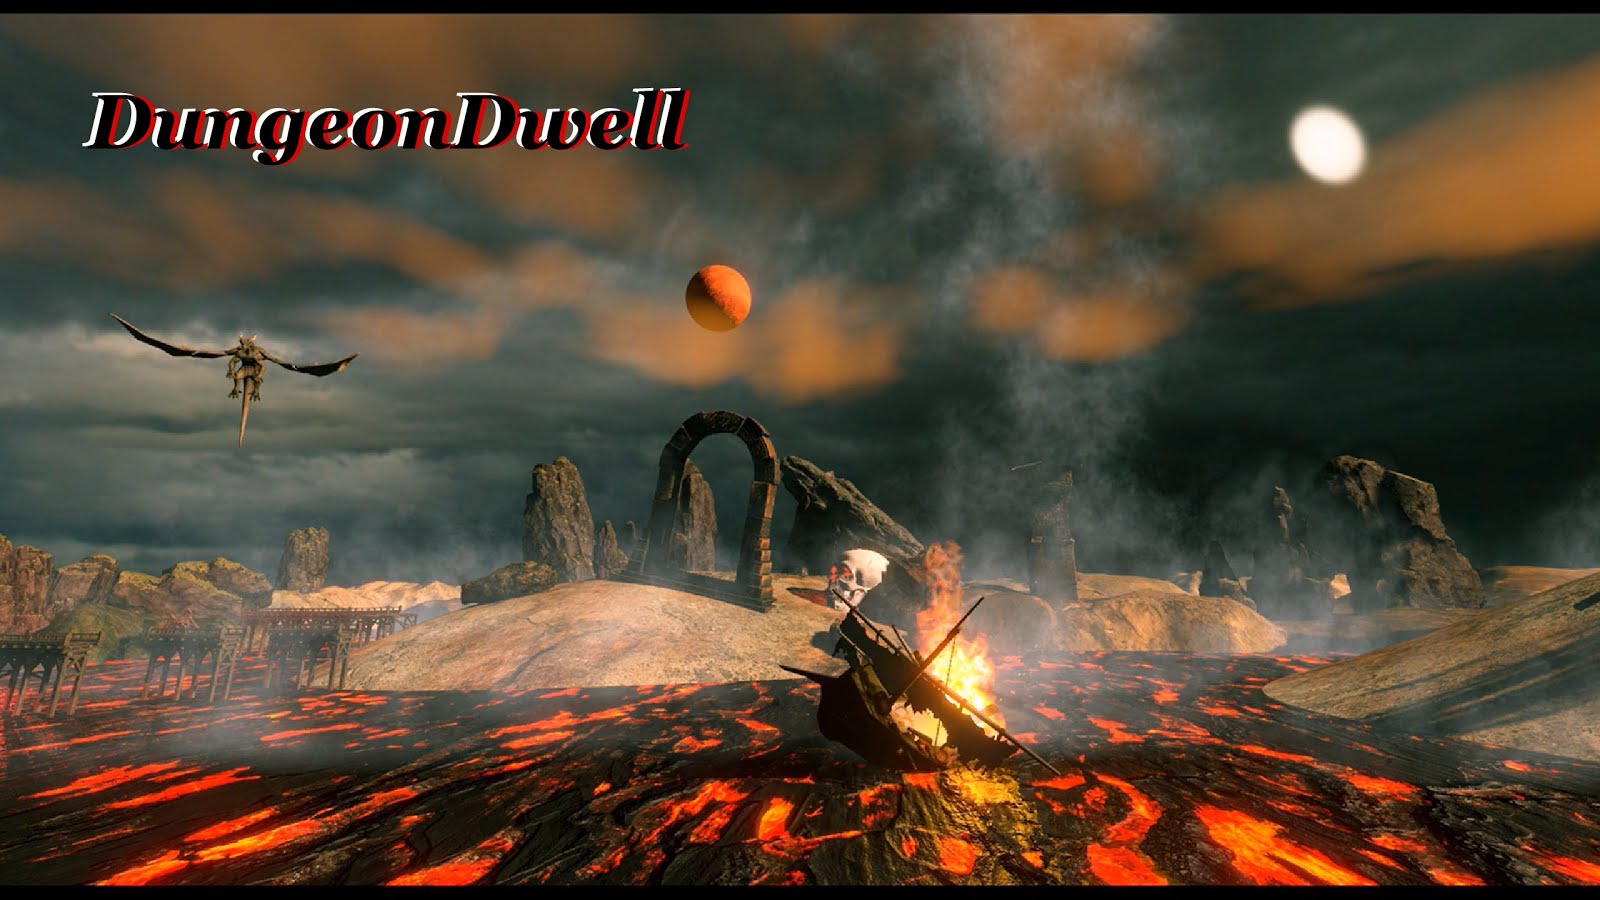 Dungeon Dwell